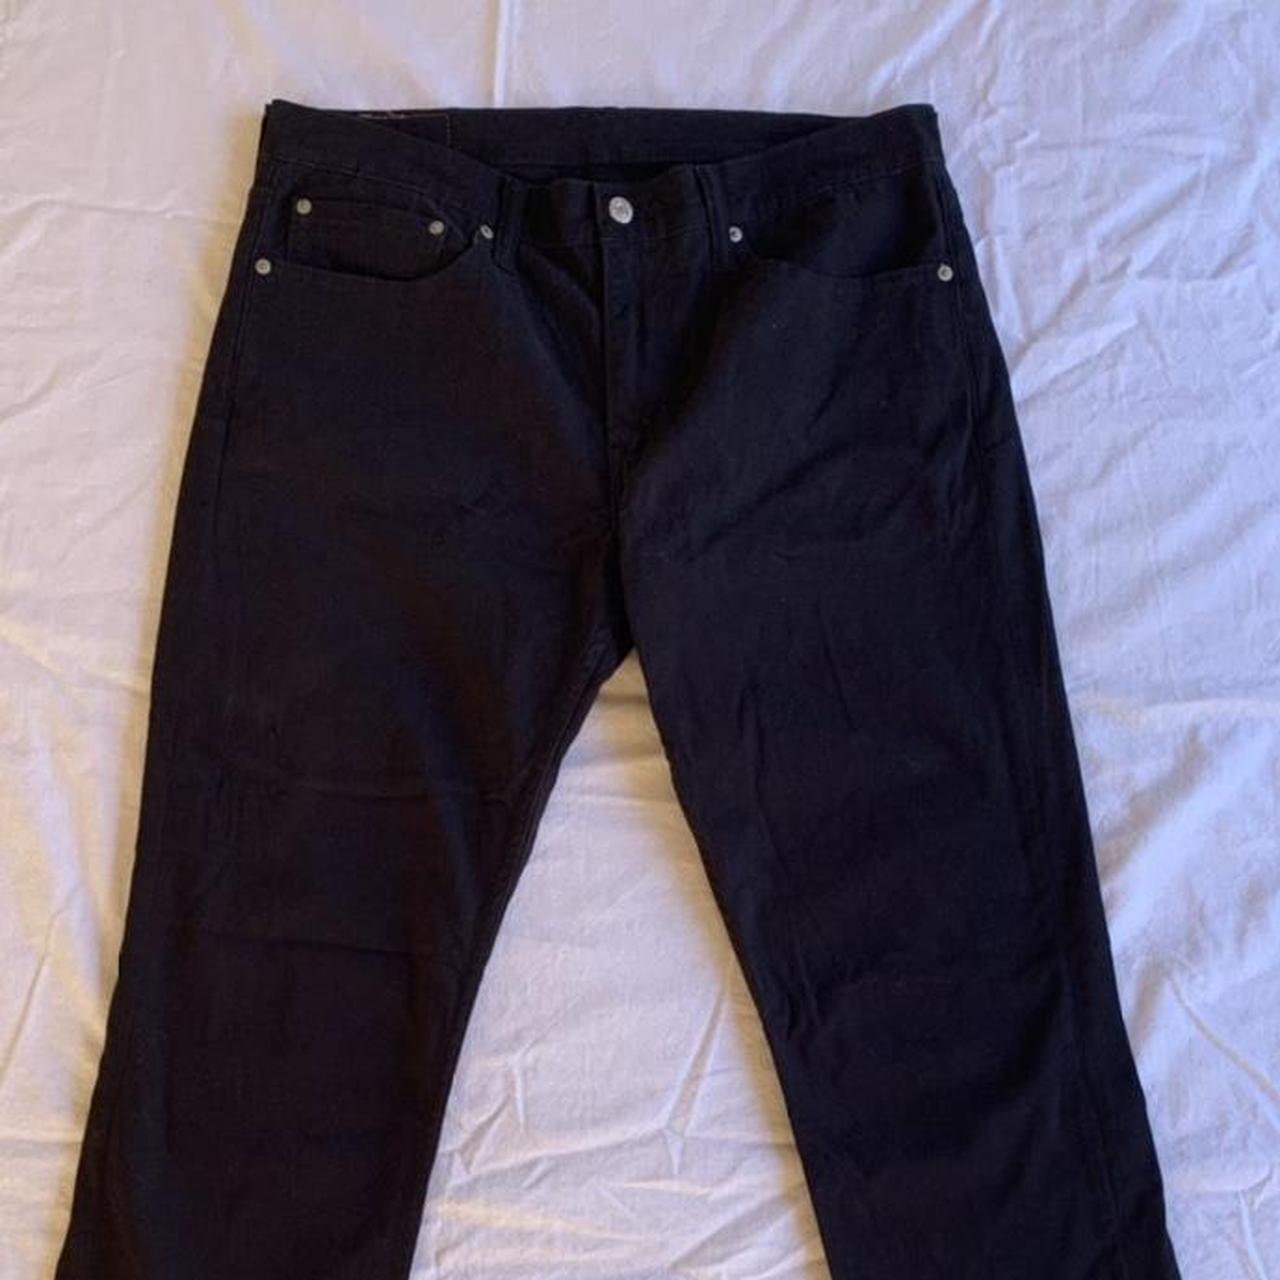 Vintage Black Levi’s 511 jeans In perfect... - Depop